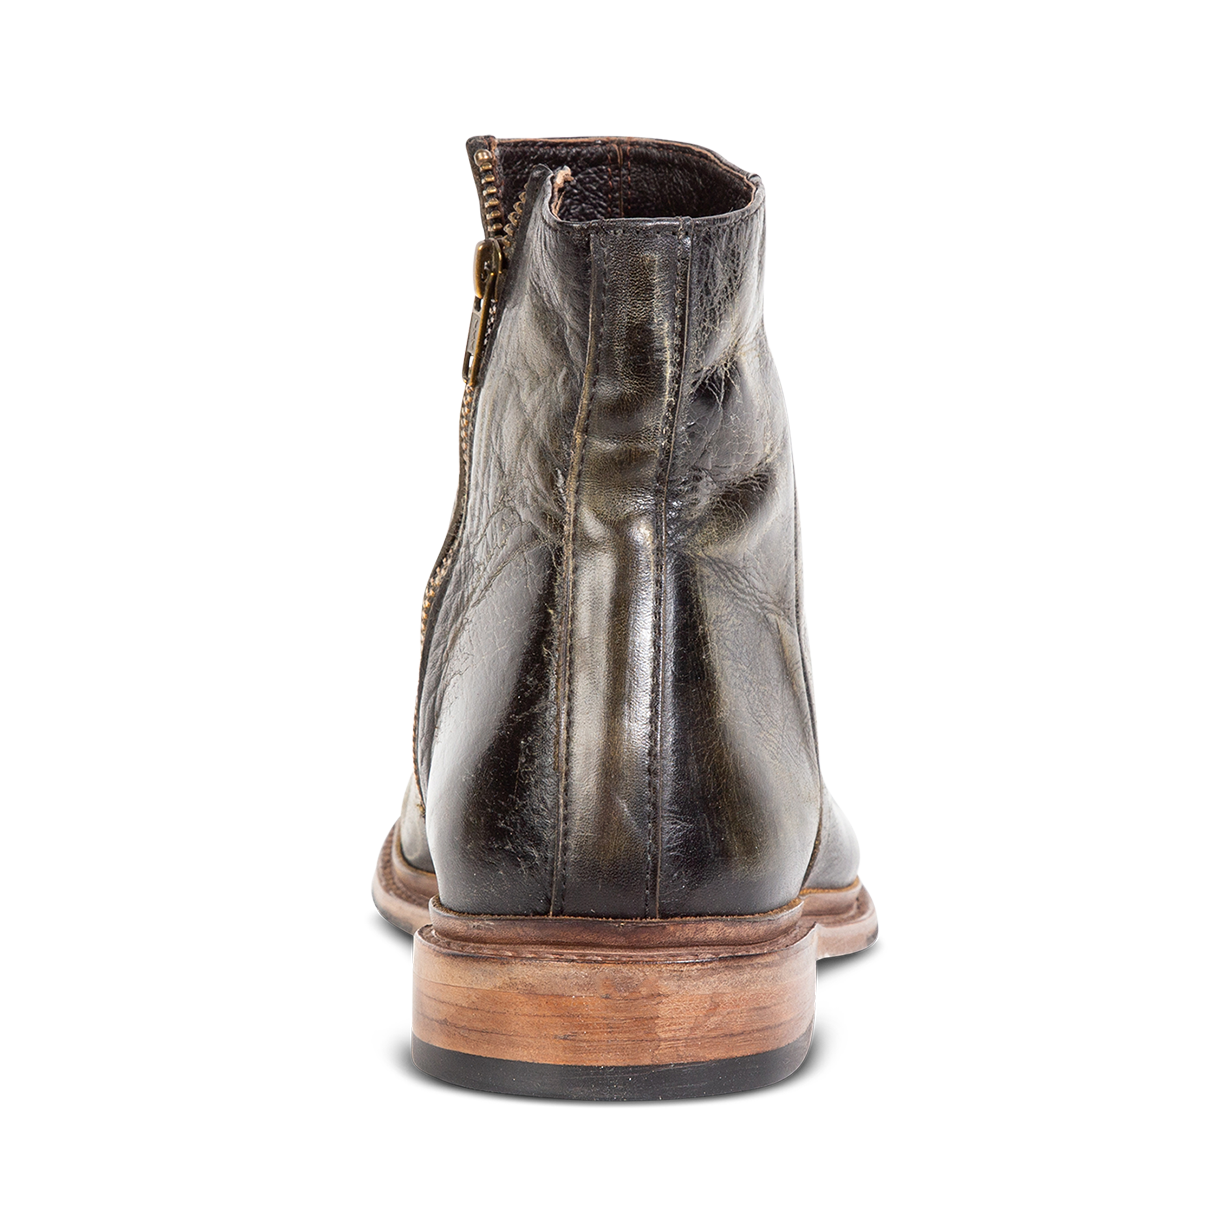 Back view showing low heel on FREEBIRD men's Douglas black olive boot